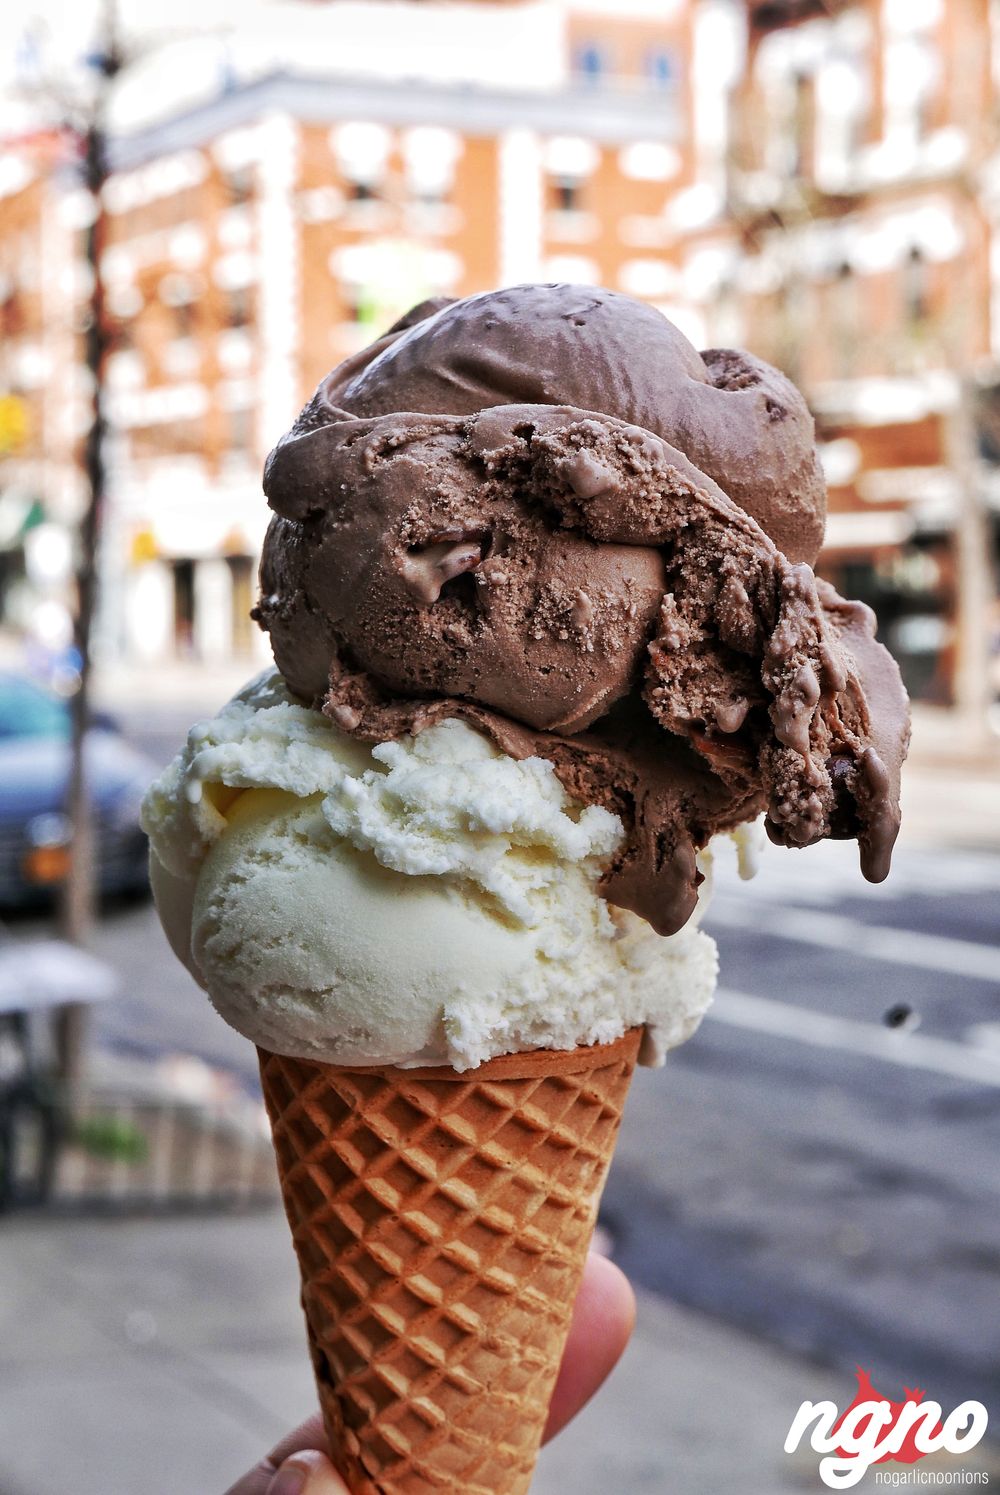 mikey-likes-it-ice-cream-new-york92017-04-20-01-37-22